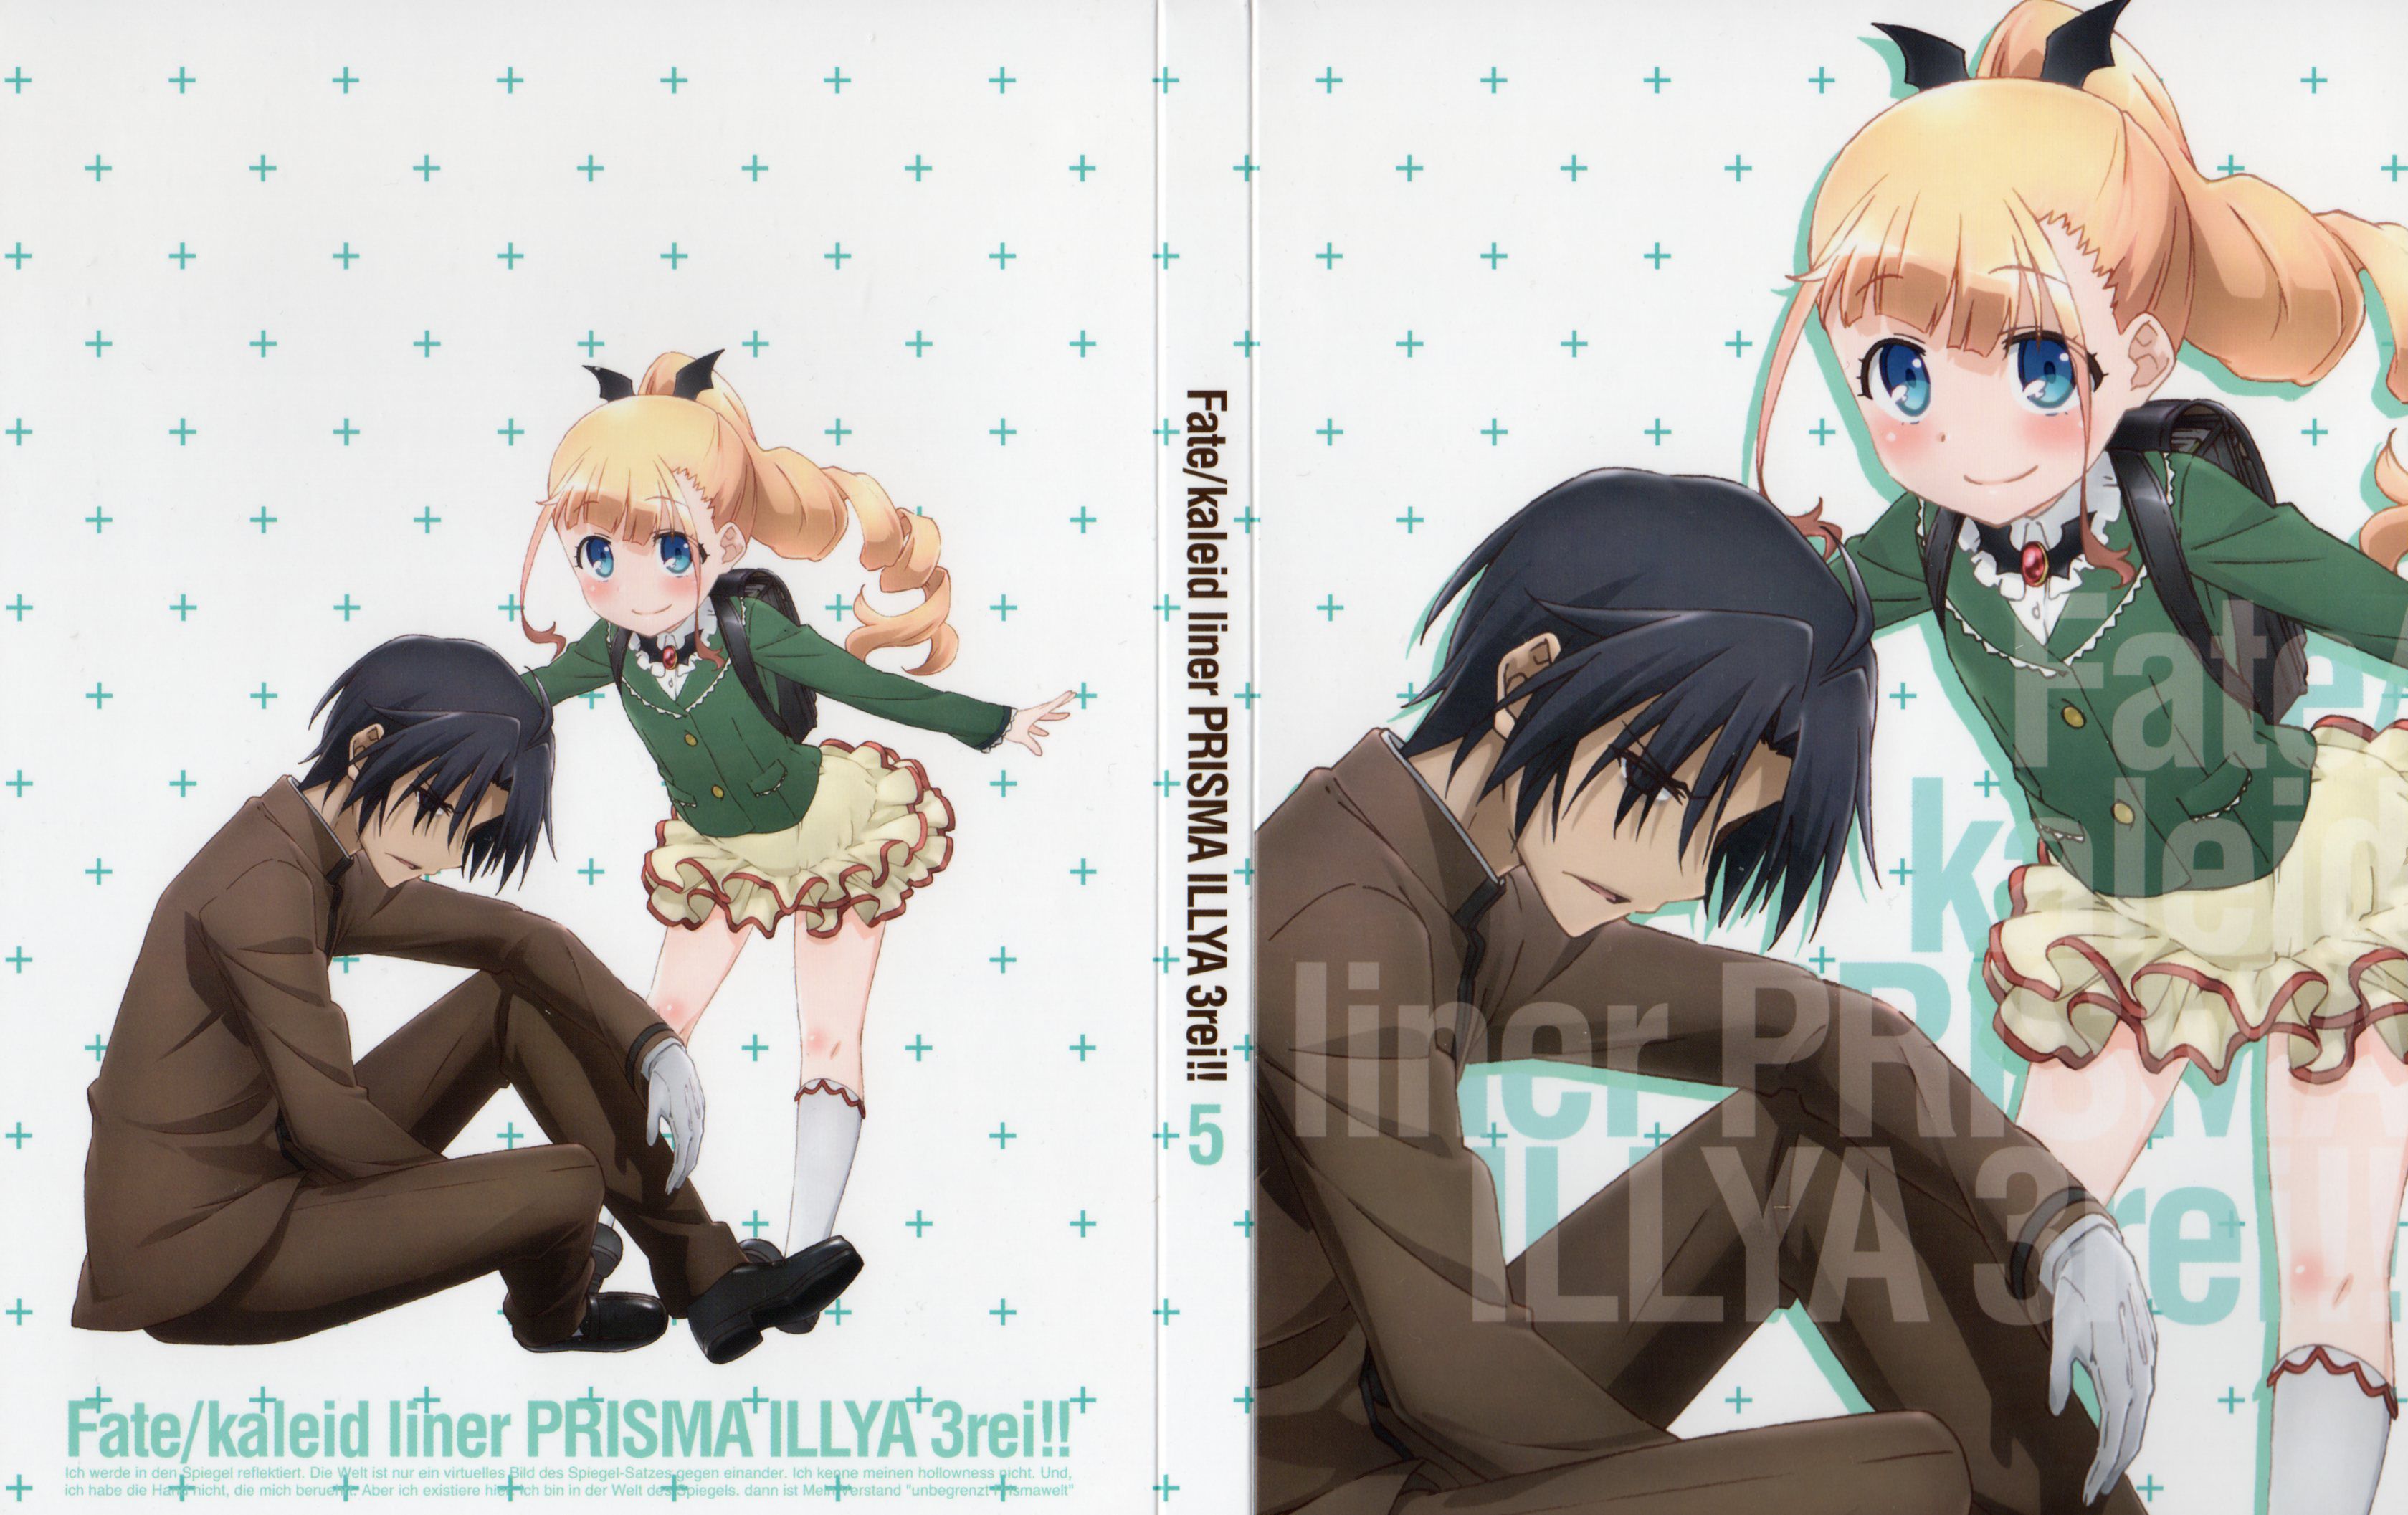 Fate/kaleid liner Prisma ☆ Ilya dry! BD vol. 5 "award animation Nightgown of Erica! reveal a kinky night dolls of sleeping! 」 114